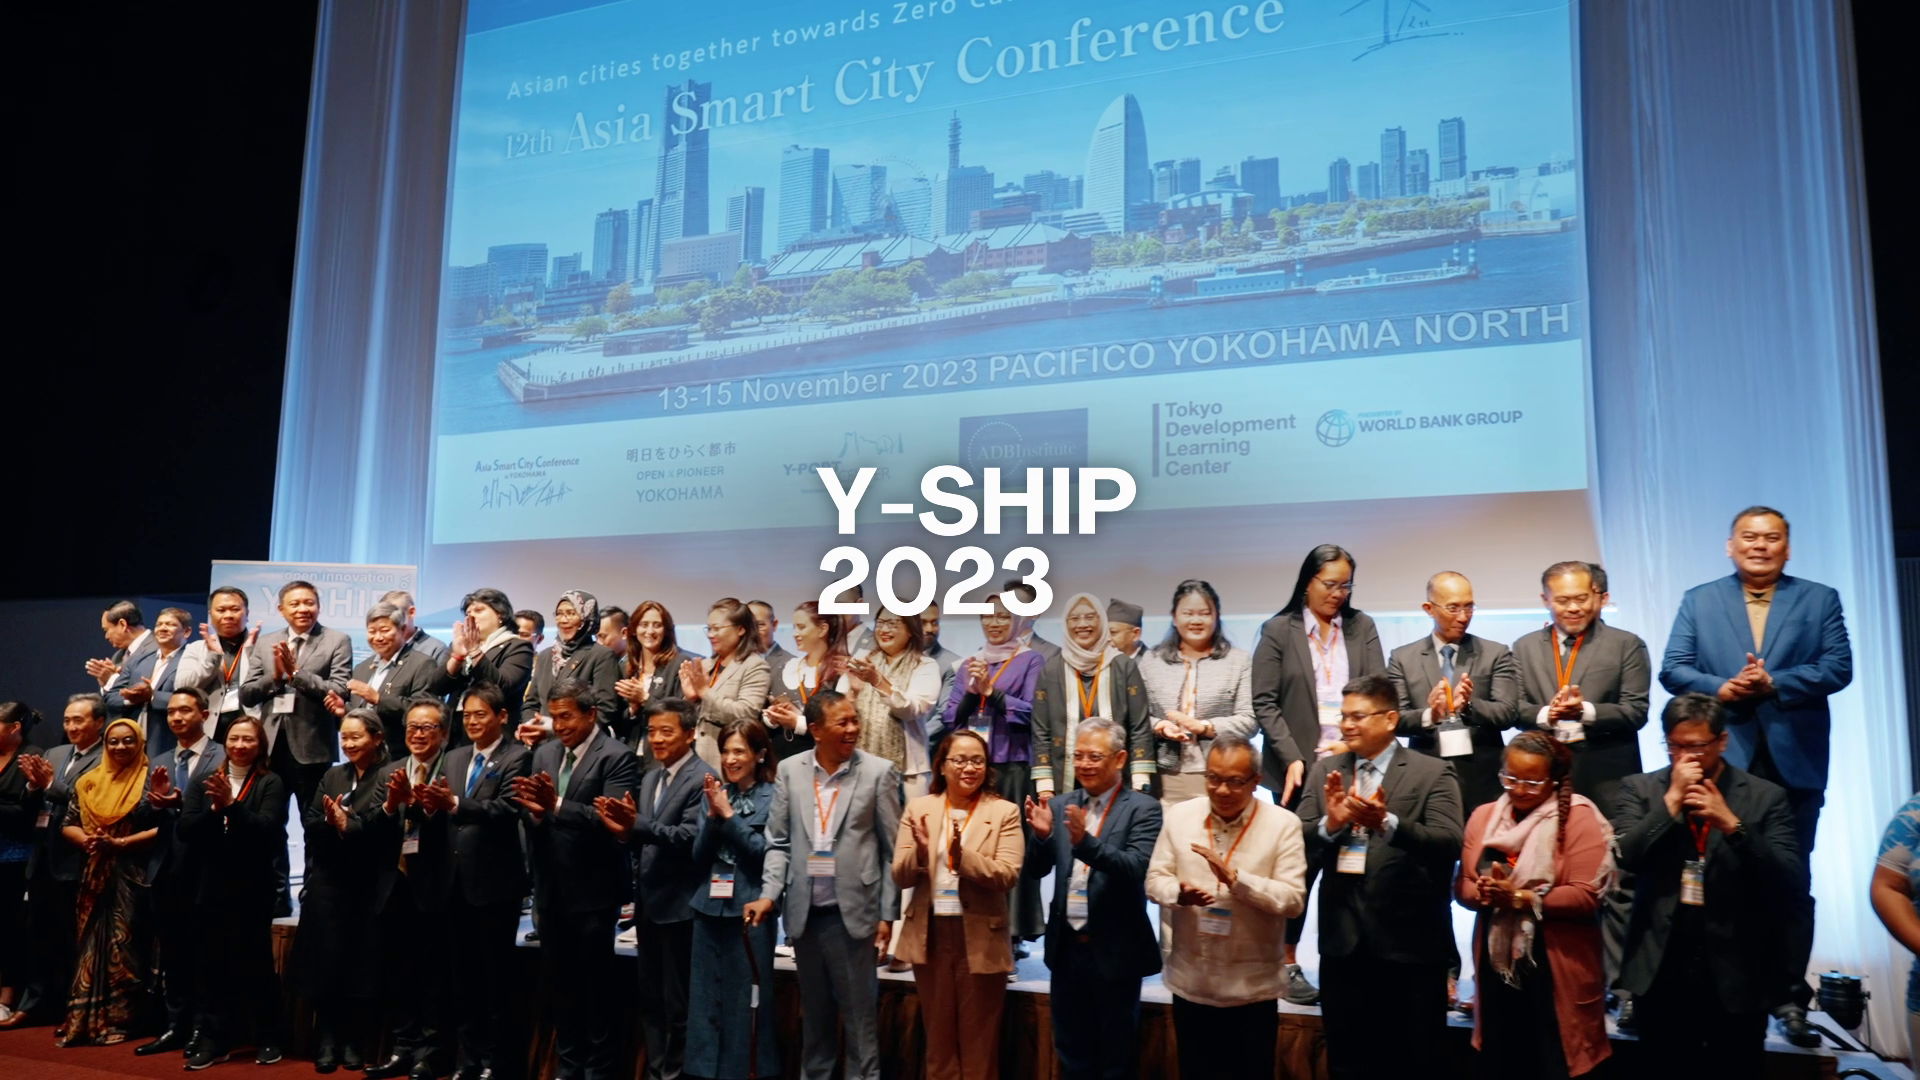 Y-SHIP Convention 2023 Yokohama Asia Smart City Conference 12